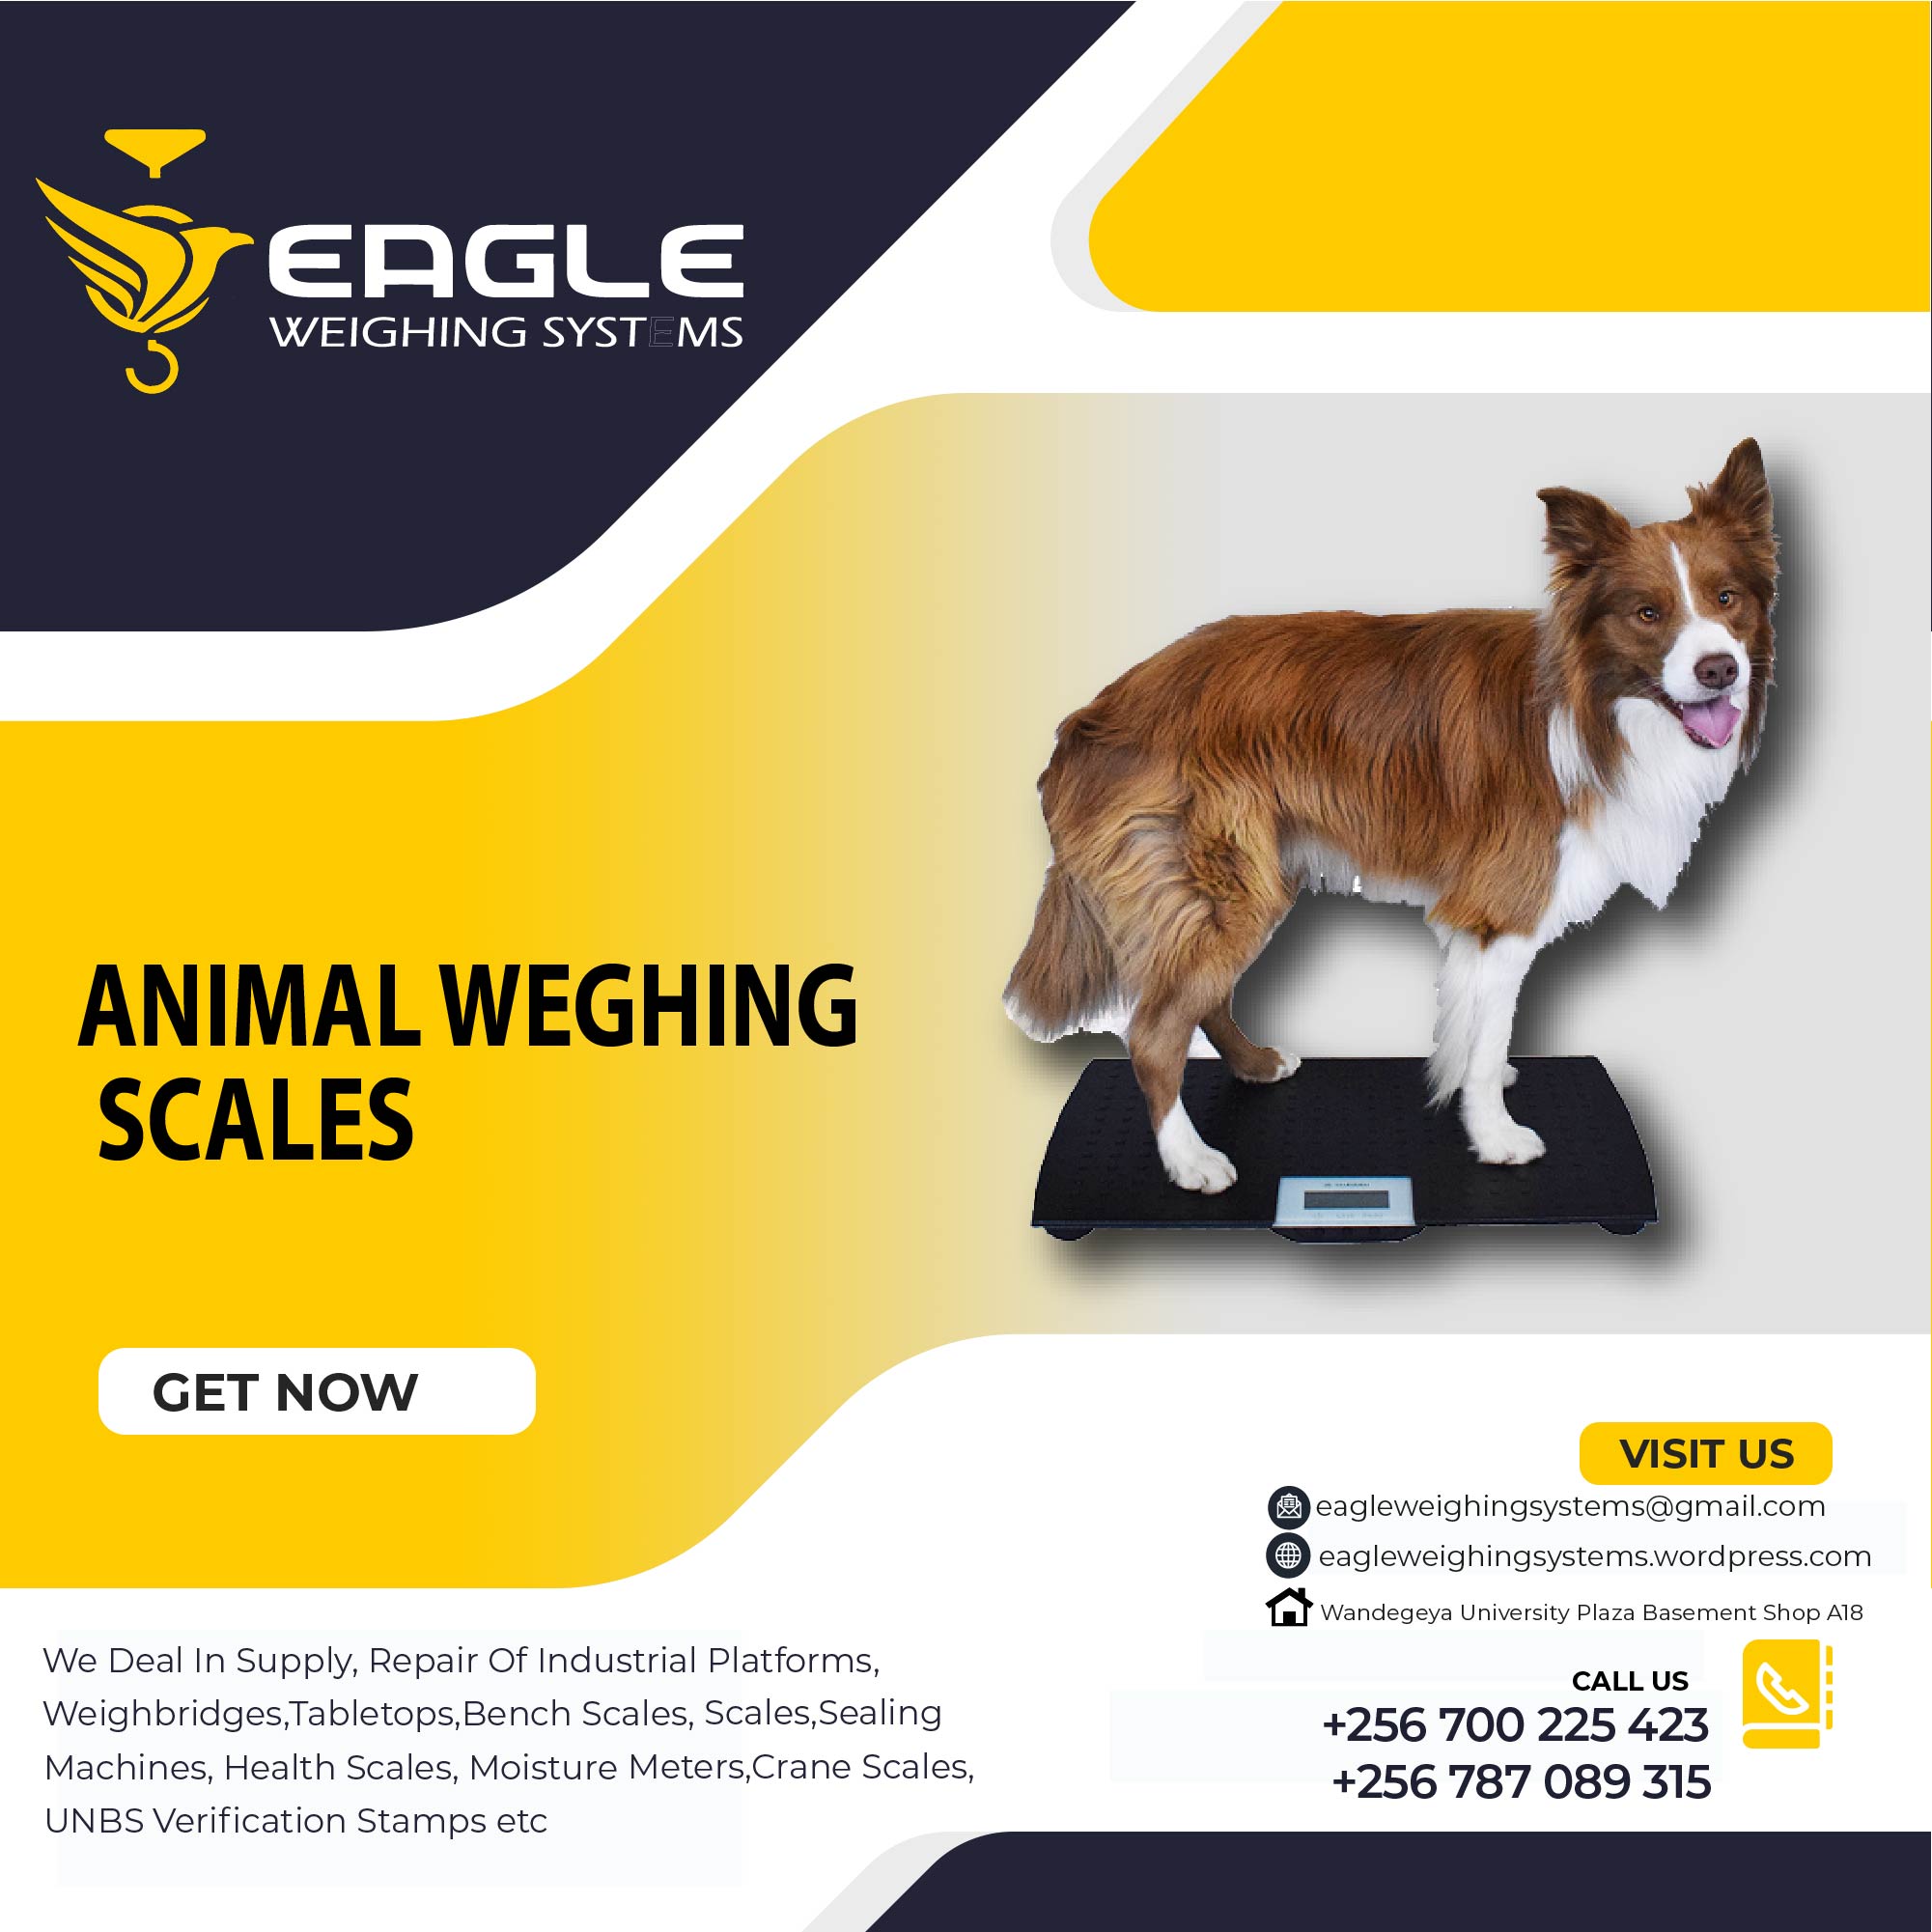 Eagle animal weighing scales 3000 Kg platforms cattle scales in Kampala Uganda, Kampala Central Division, Central, Uganda